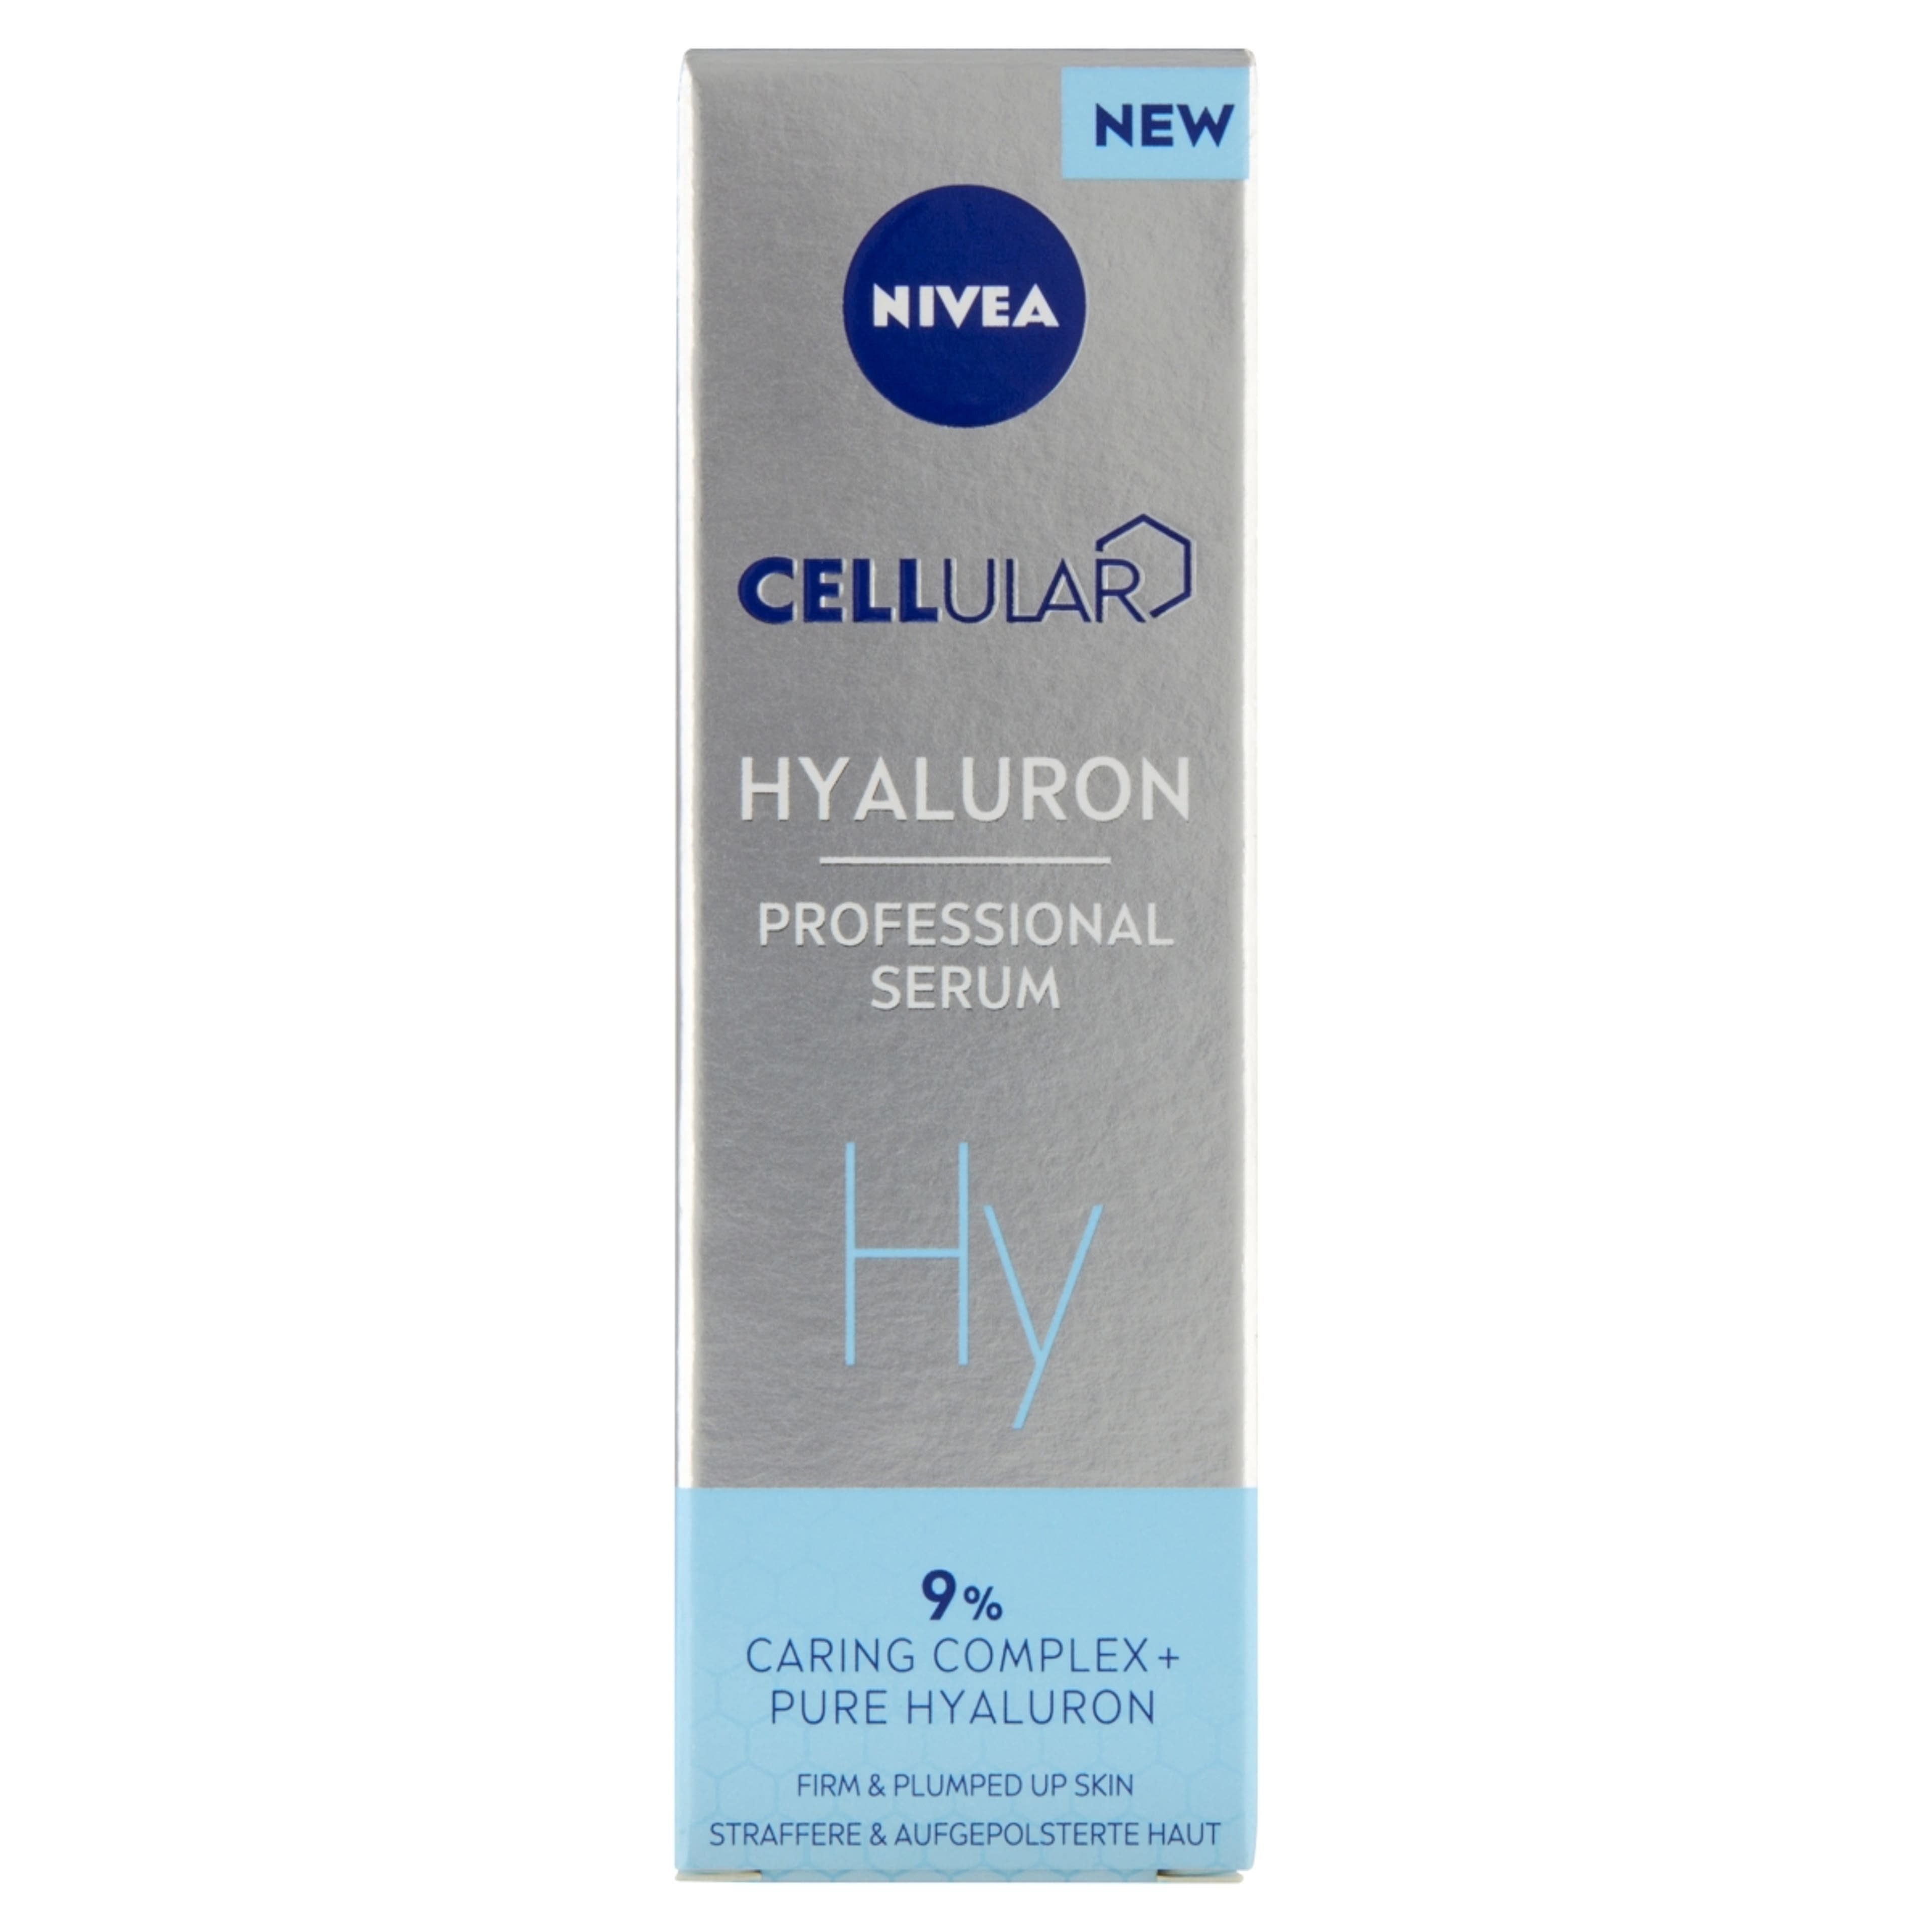 Nivea Cellular Hyaluron professzionális szérum - 30 ml-1